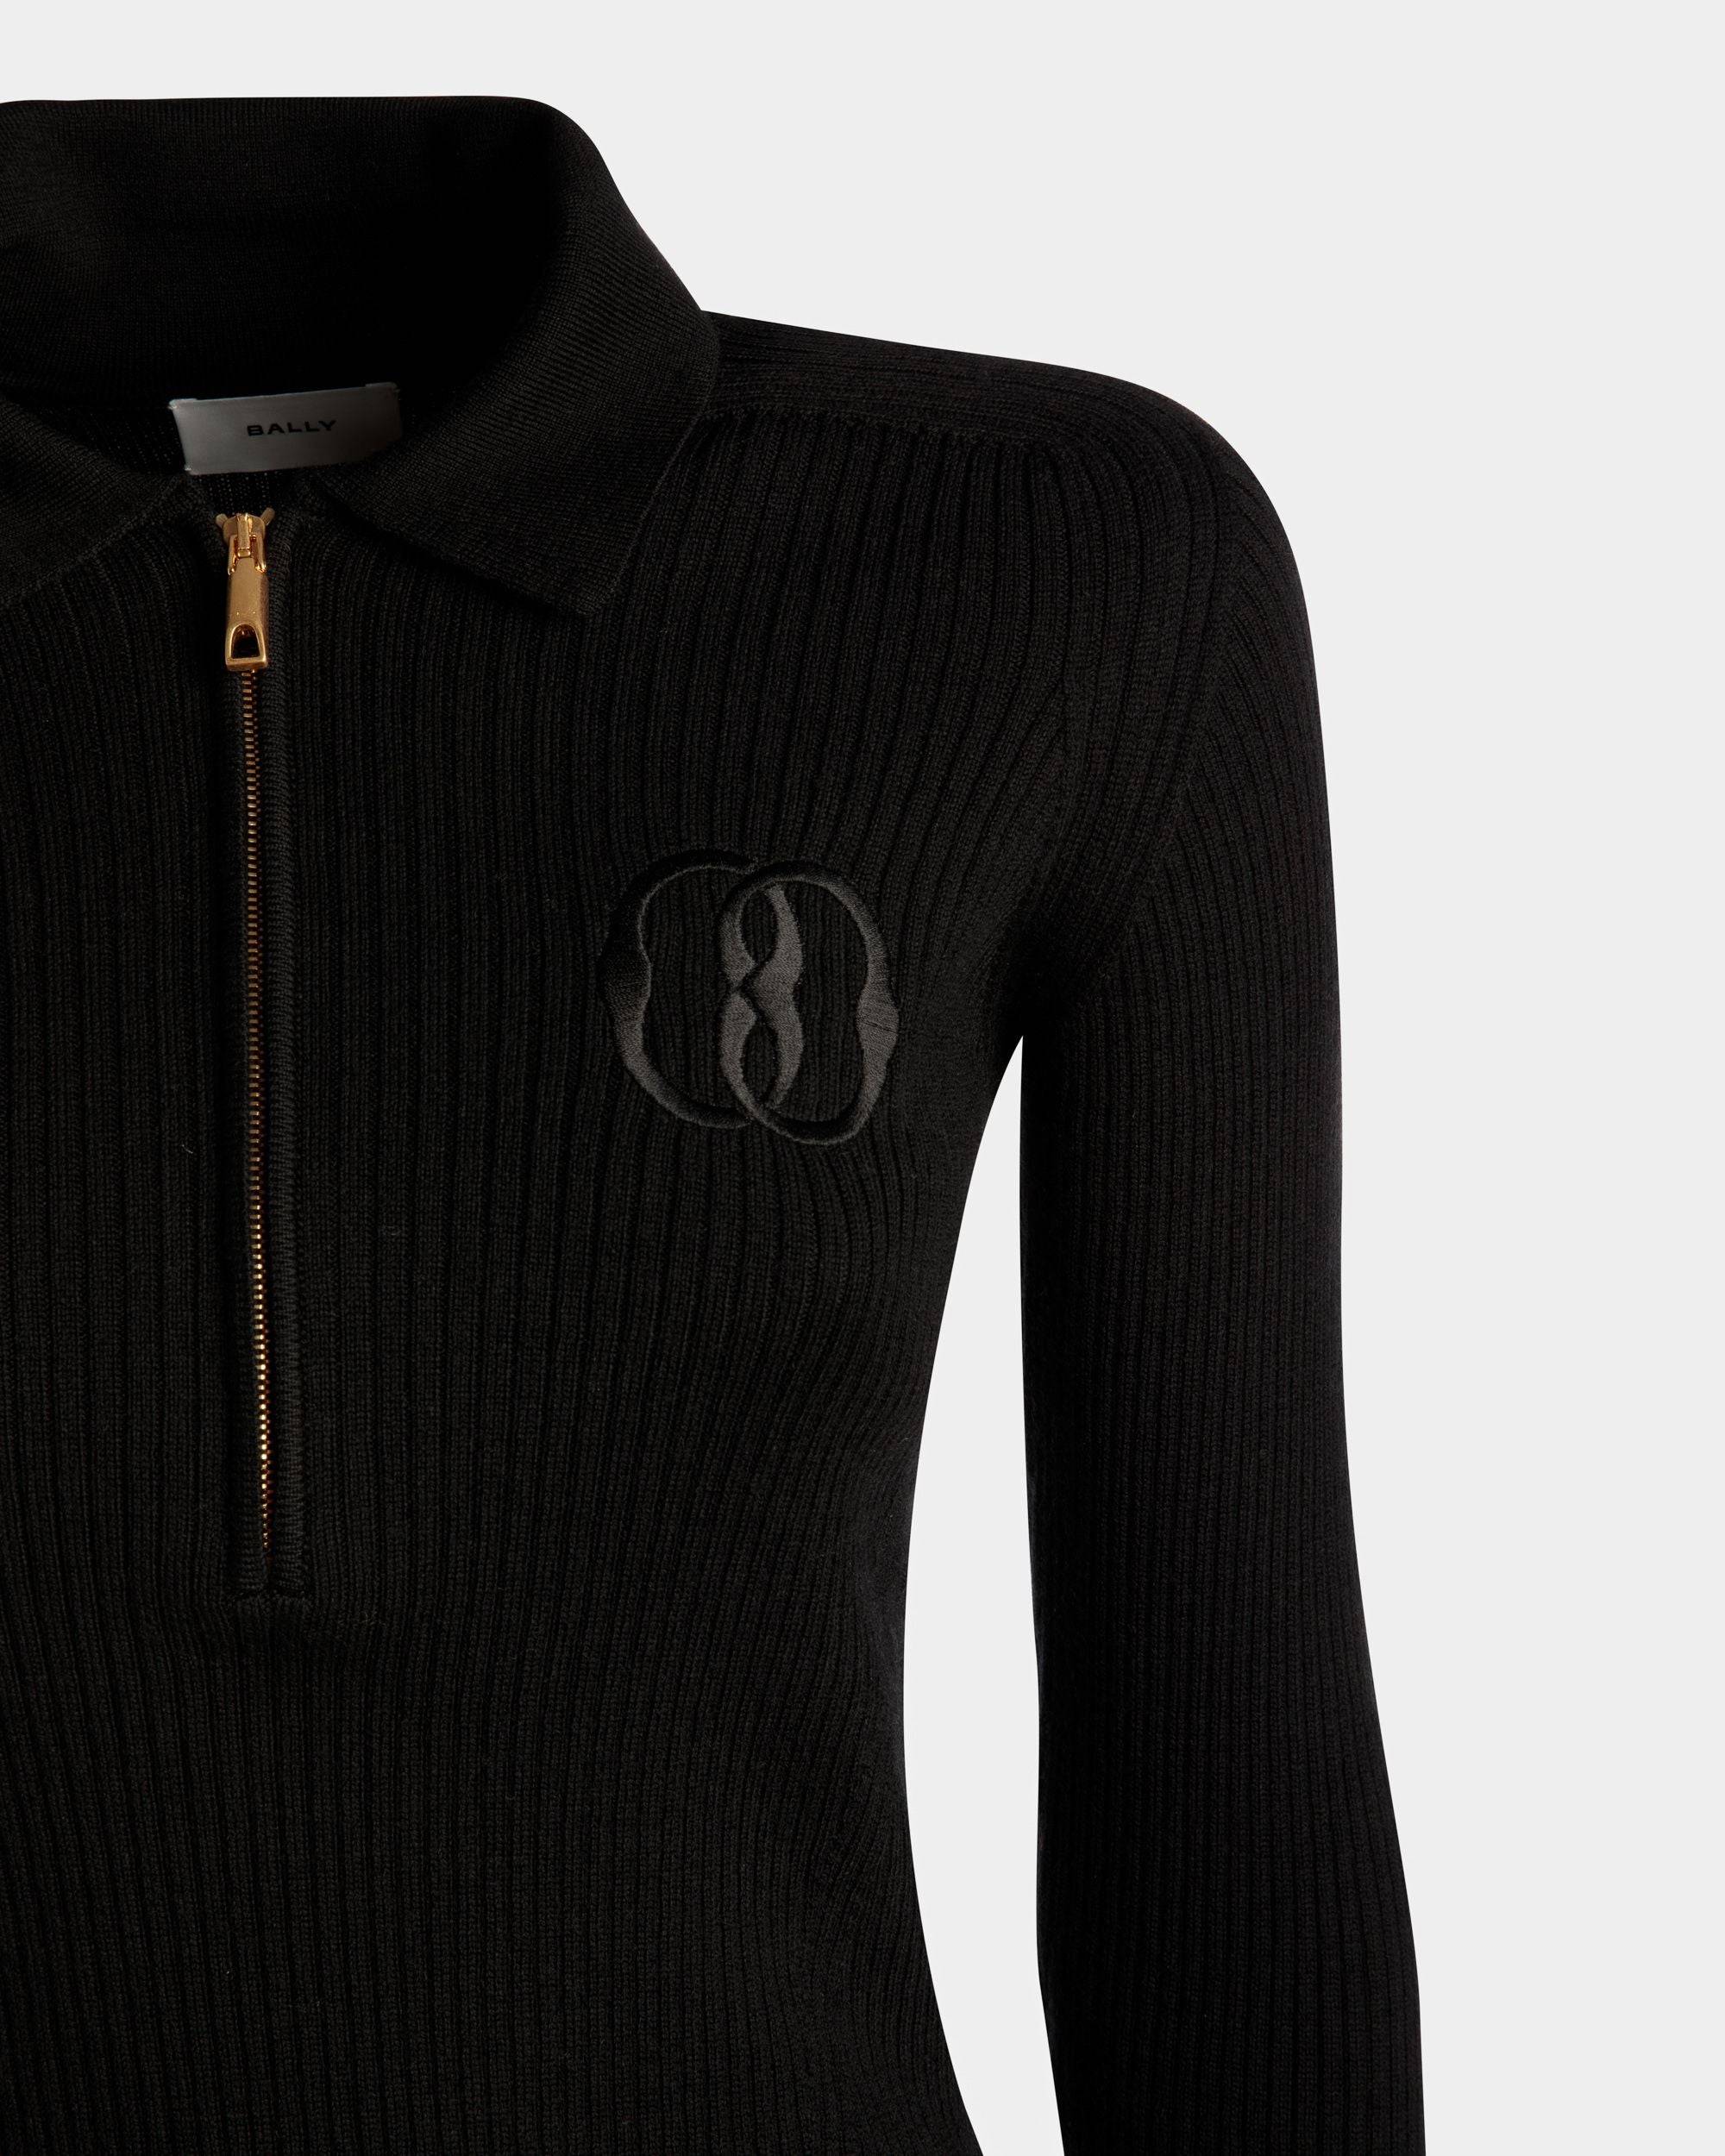 Langarm-Poloshirt | Poloshirt für Damen | Schwarze Wolle | Bally | Model getragen Detail